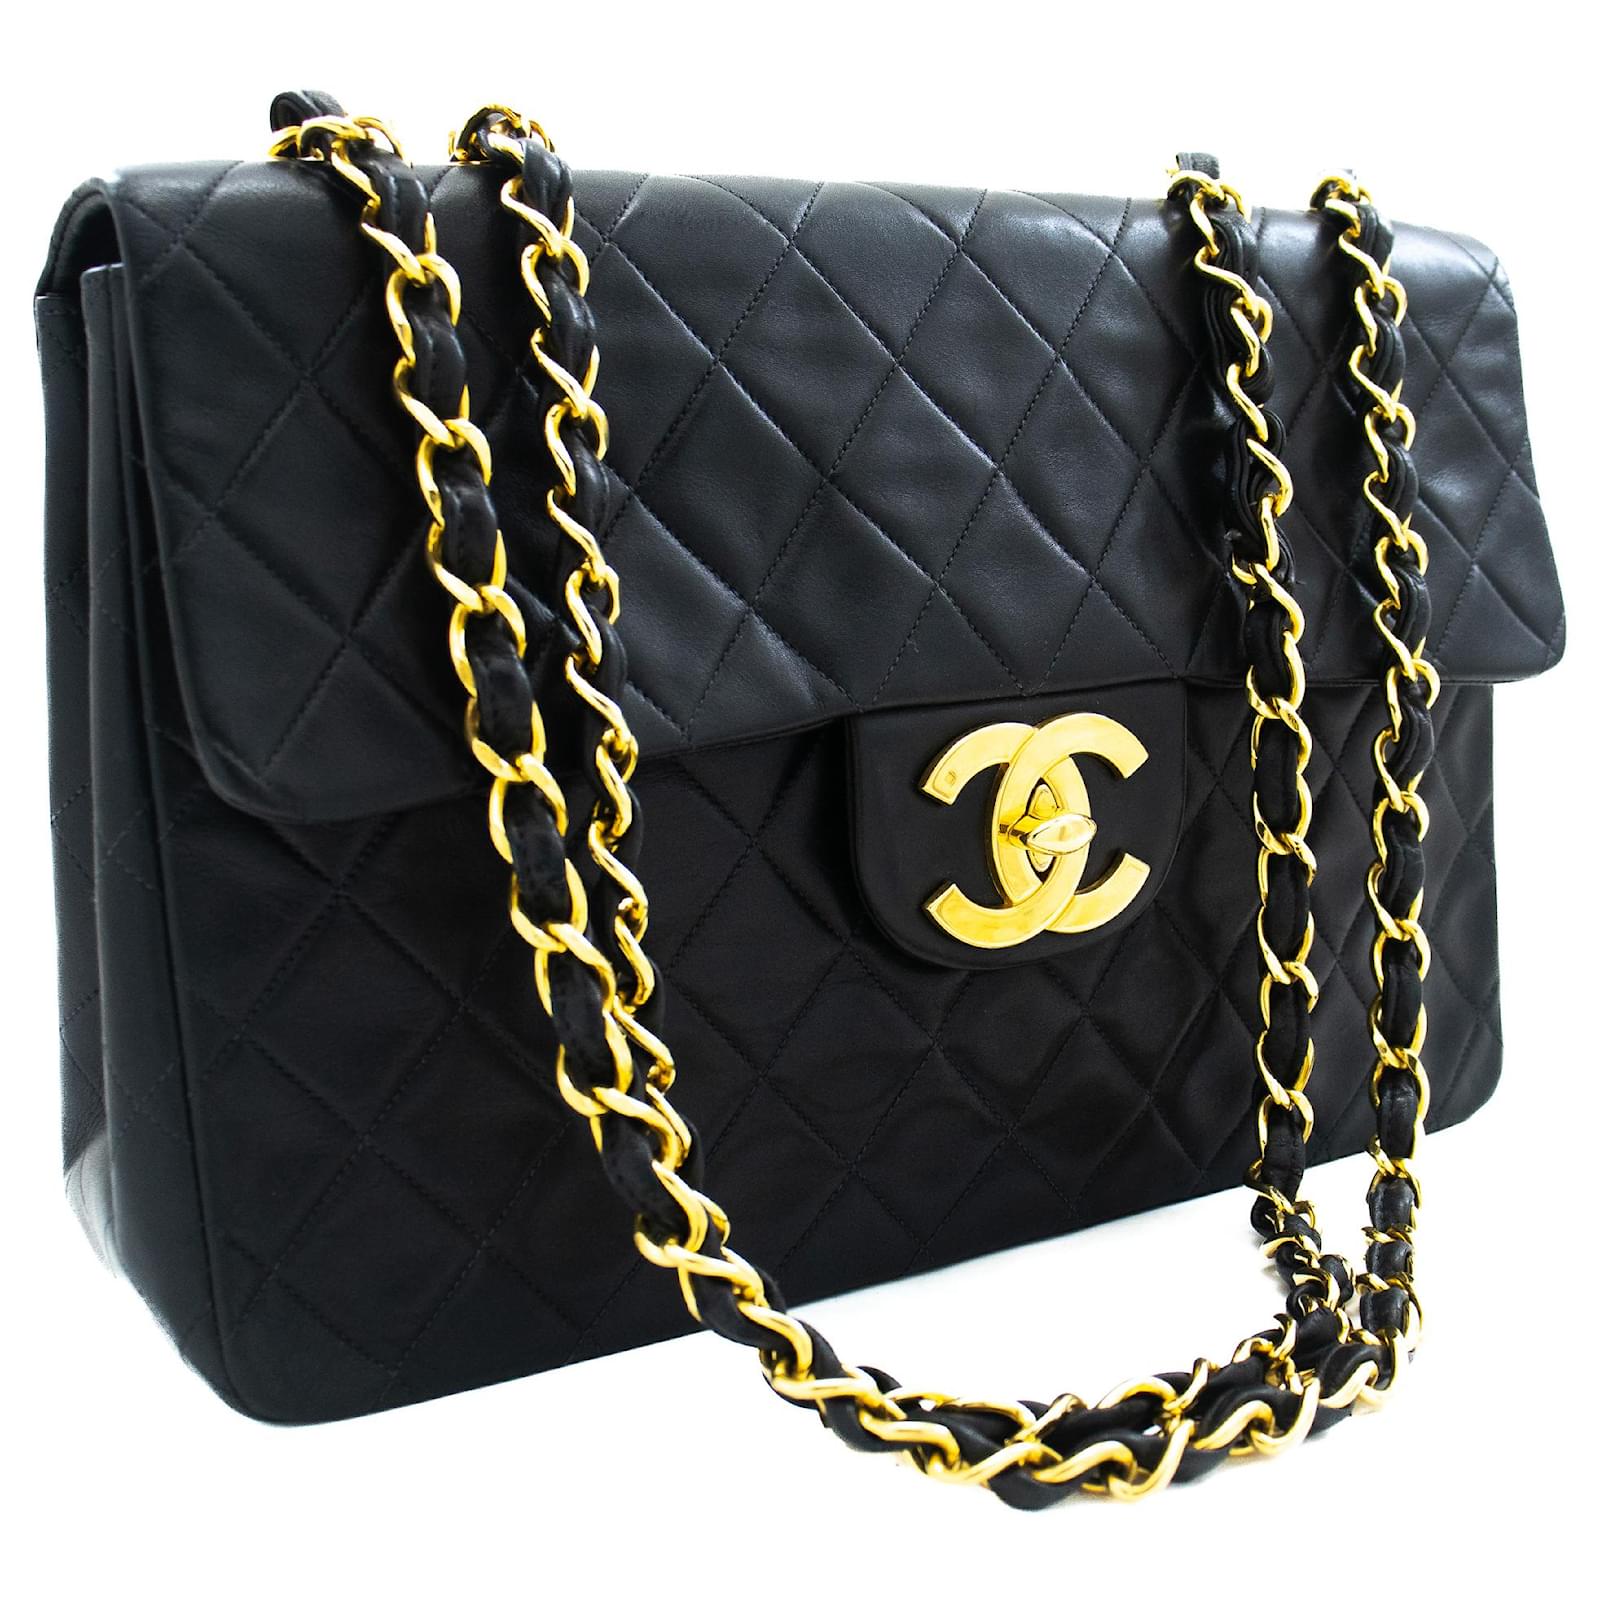 Handbags Chanel Chanel Classic Large 13 Flap Chain Shoulder Bag Black Lambskin